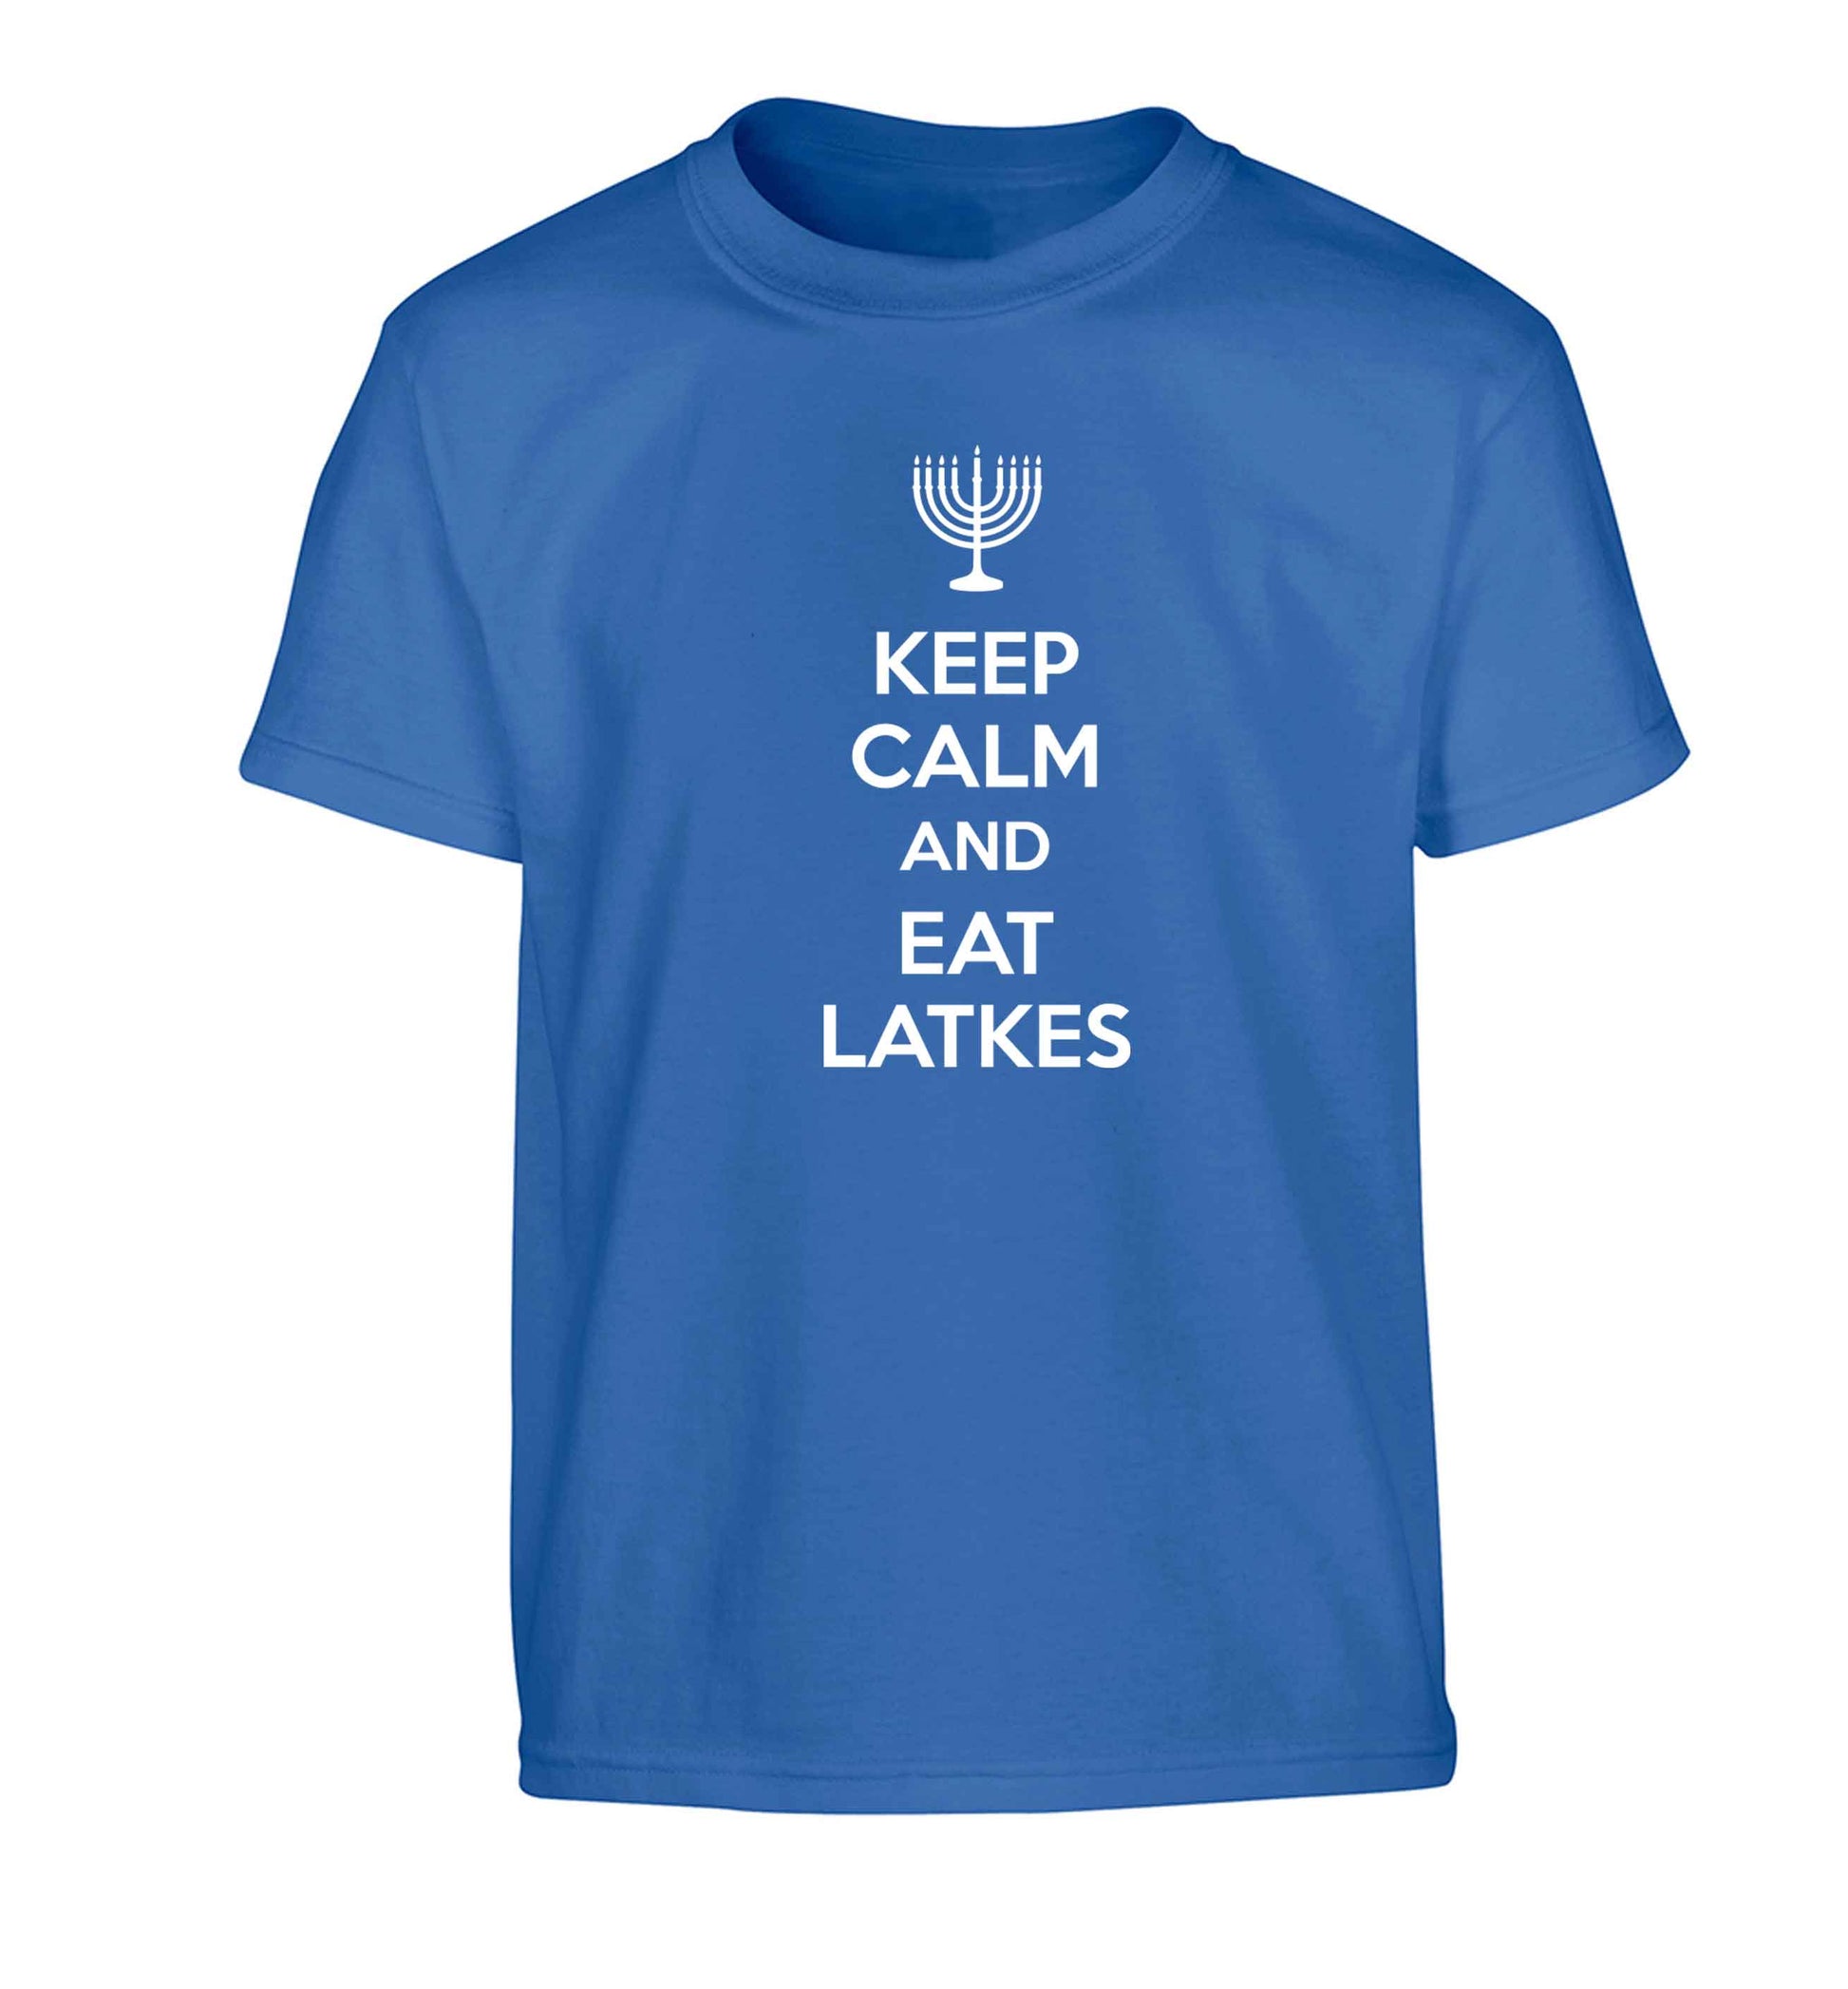 Keep calm and eat latkes Children's blue Tshirt 12-13 Years